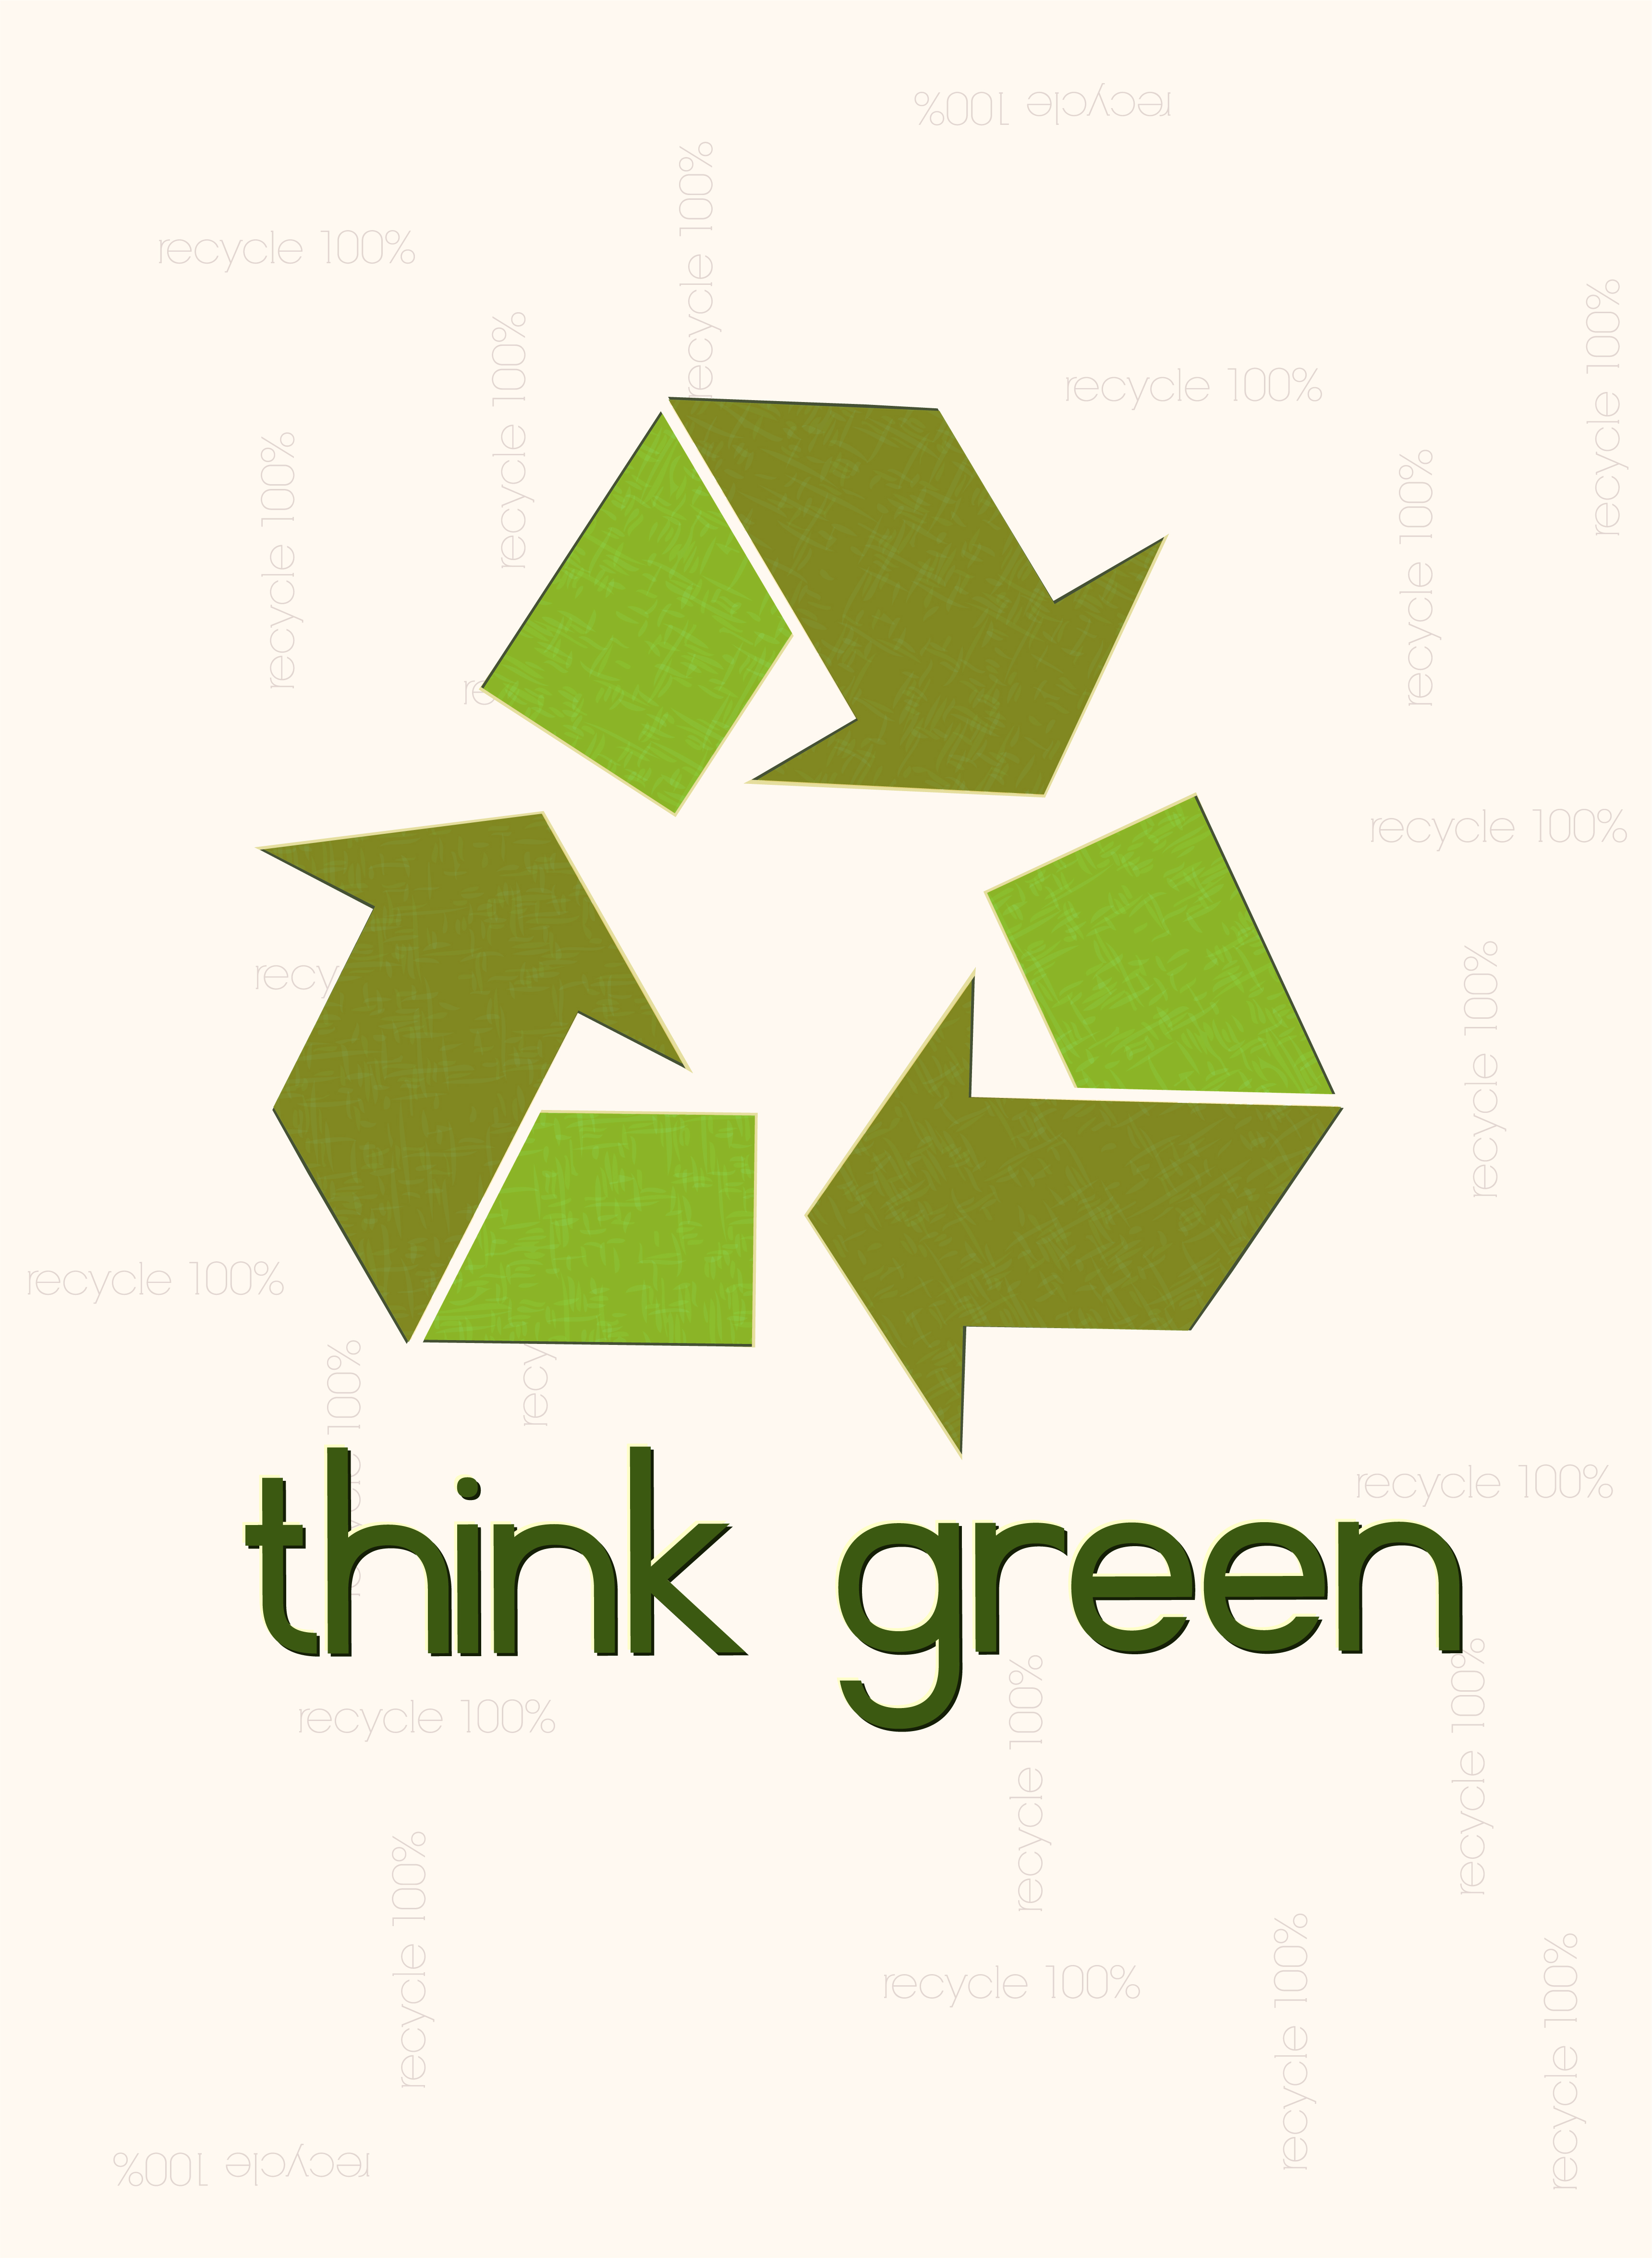 Green Behavior: Earth Day Goodies 2013